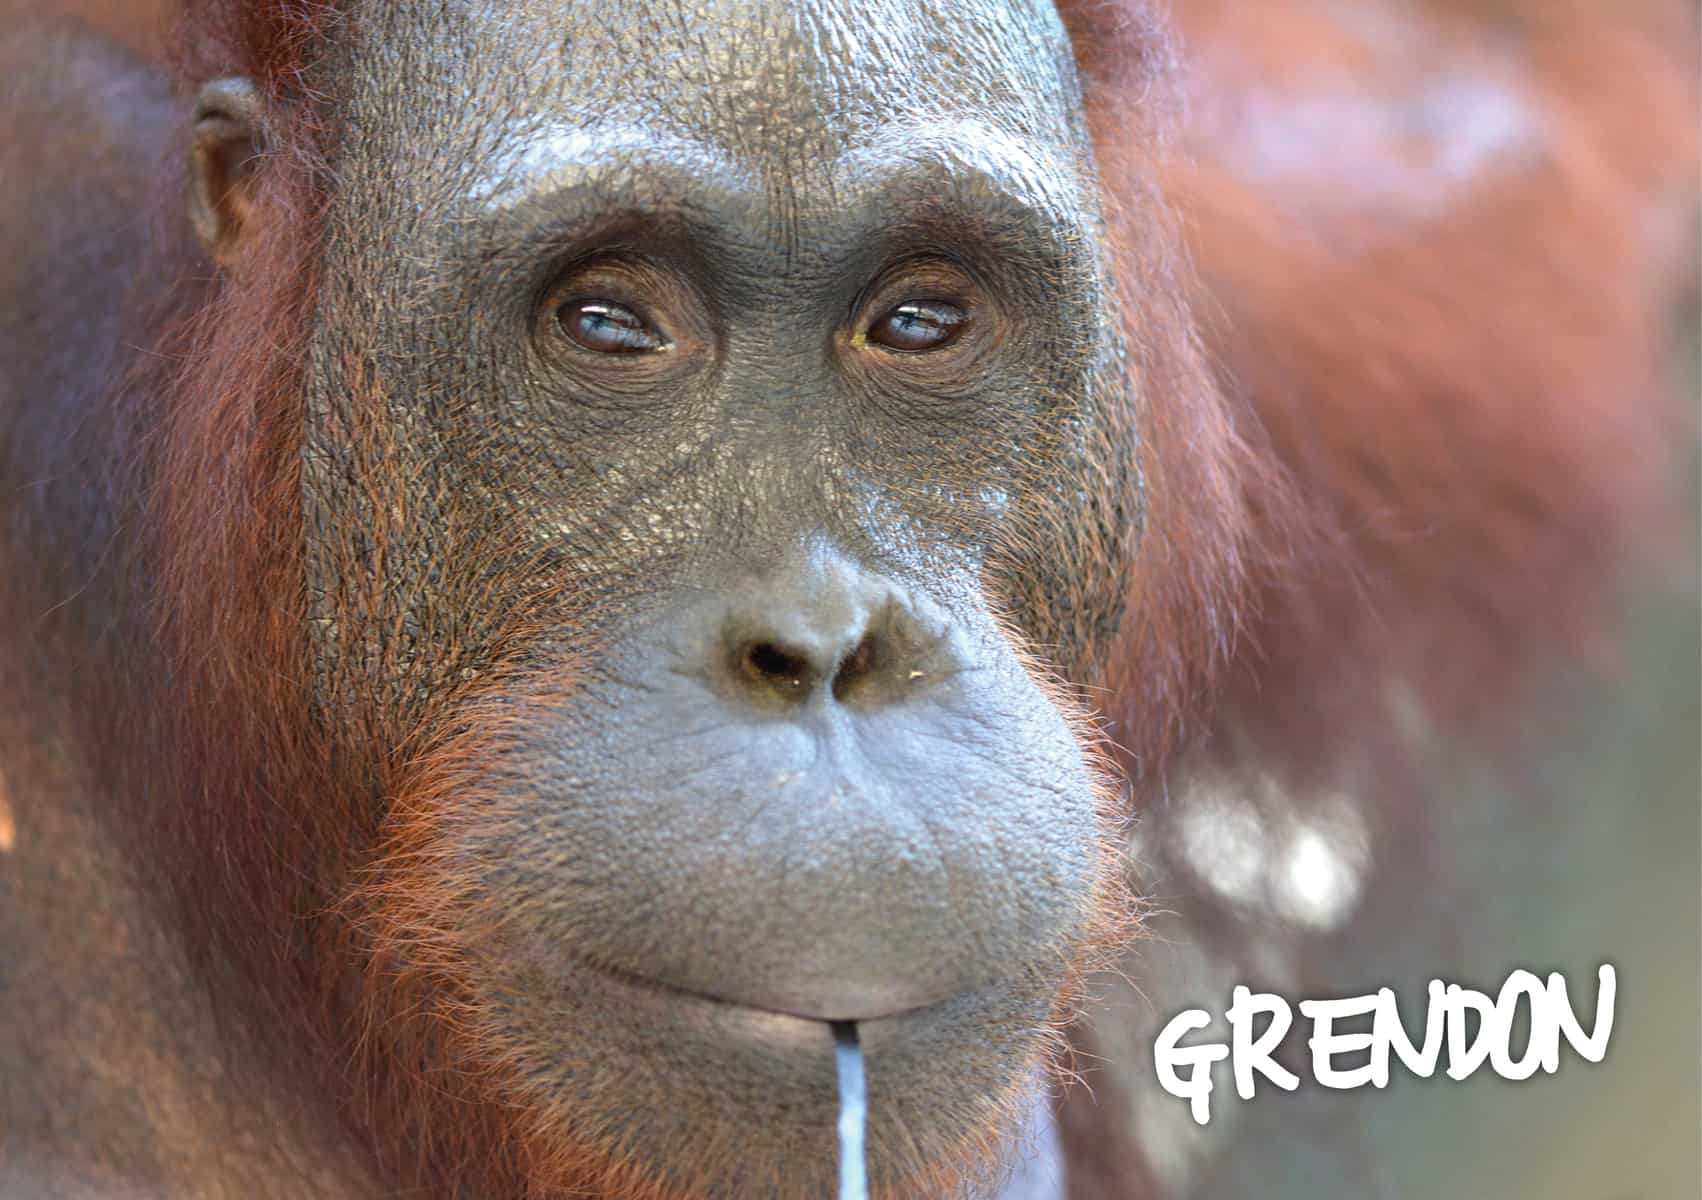 grendon orangutang